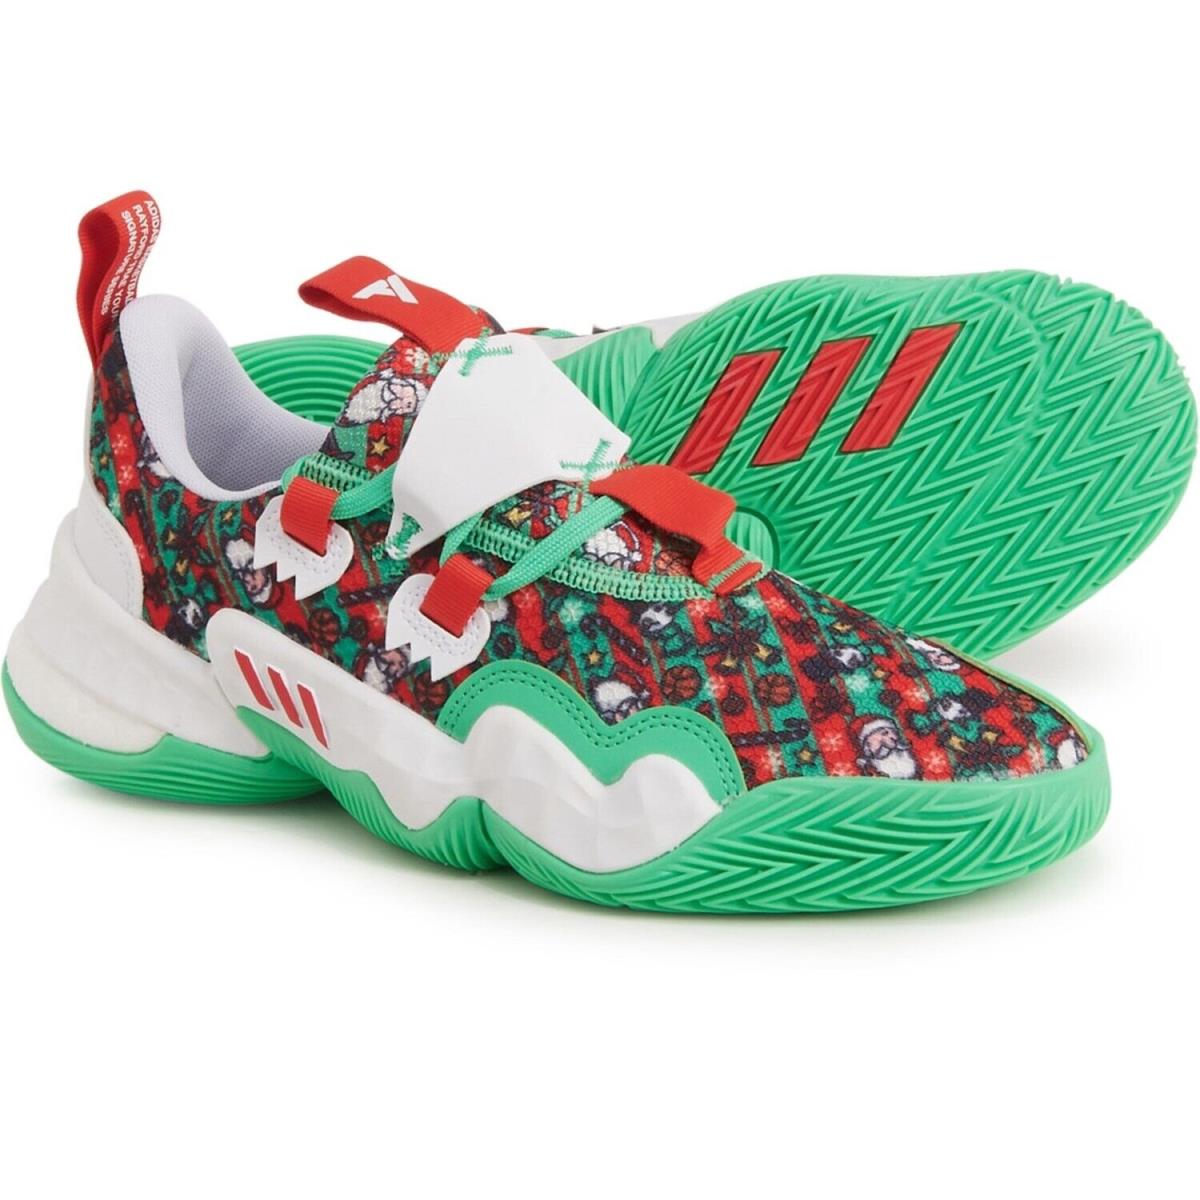 Adidas Trae Young 1 Shoes Men Sz 5.5 / Women Sz 6.5 Green Red Christmas GY0305